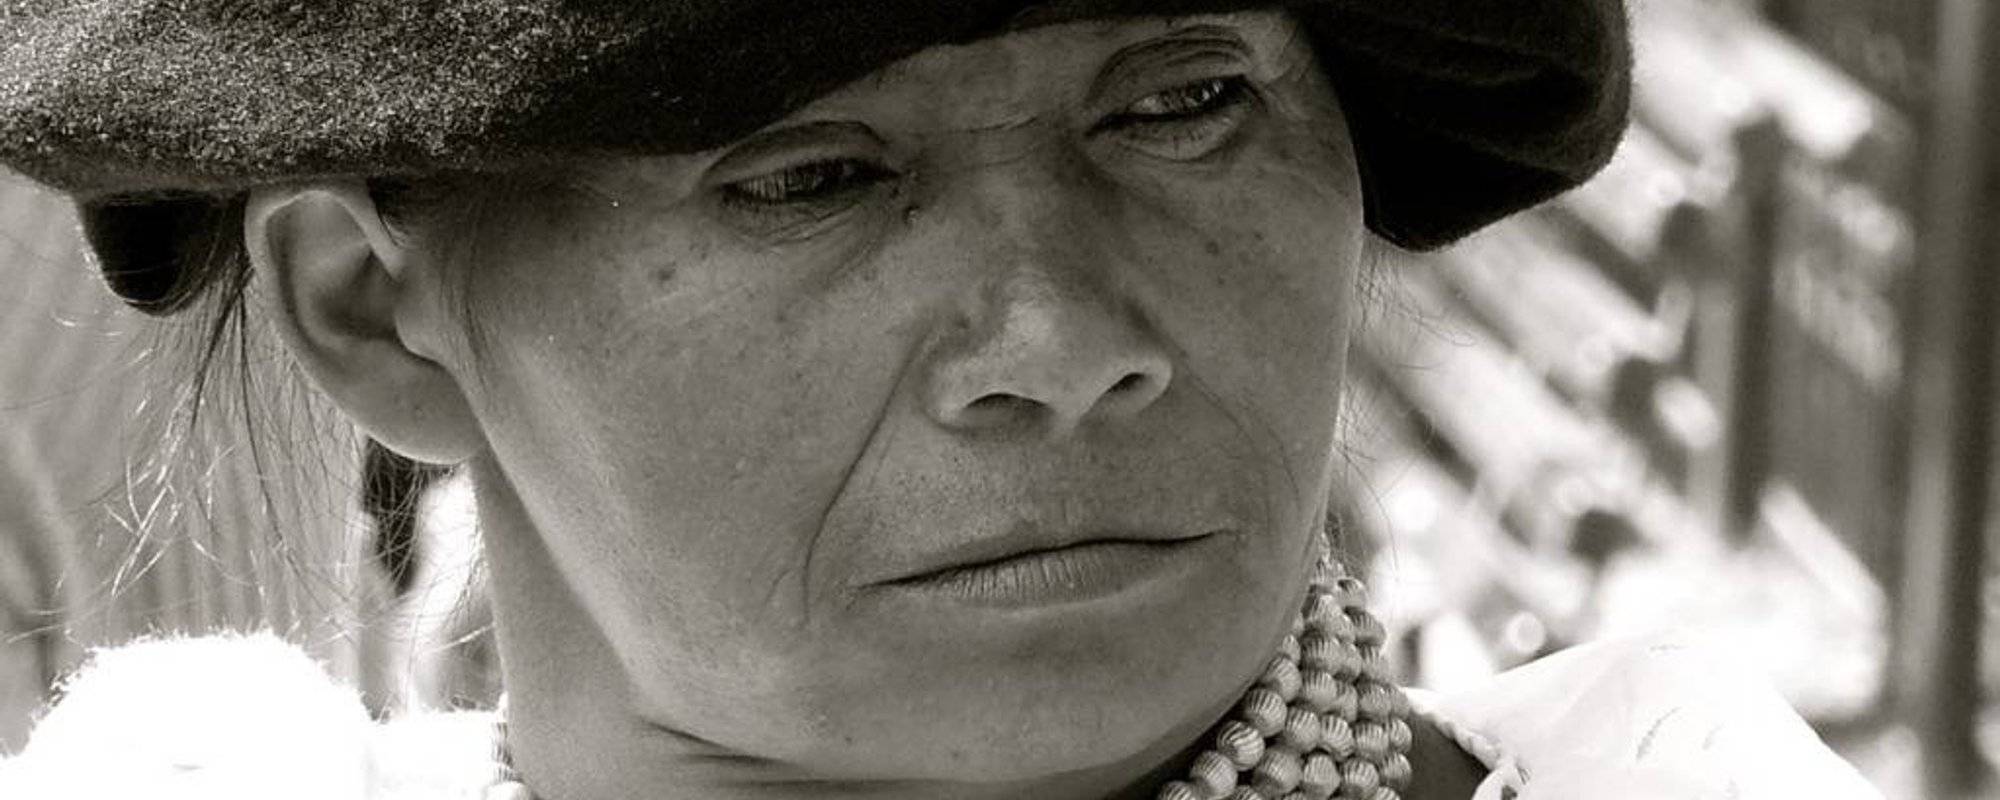 ECUADOR SERIES: Ecuadorian women and cultural identity